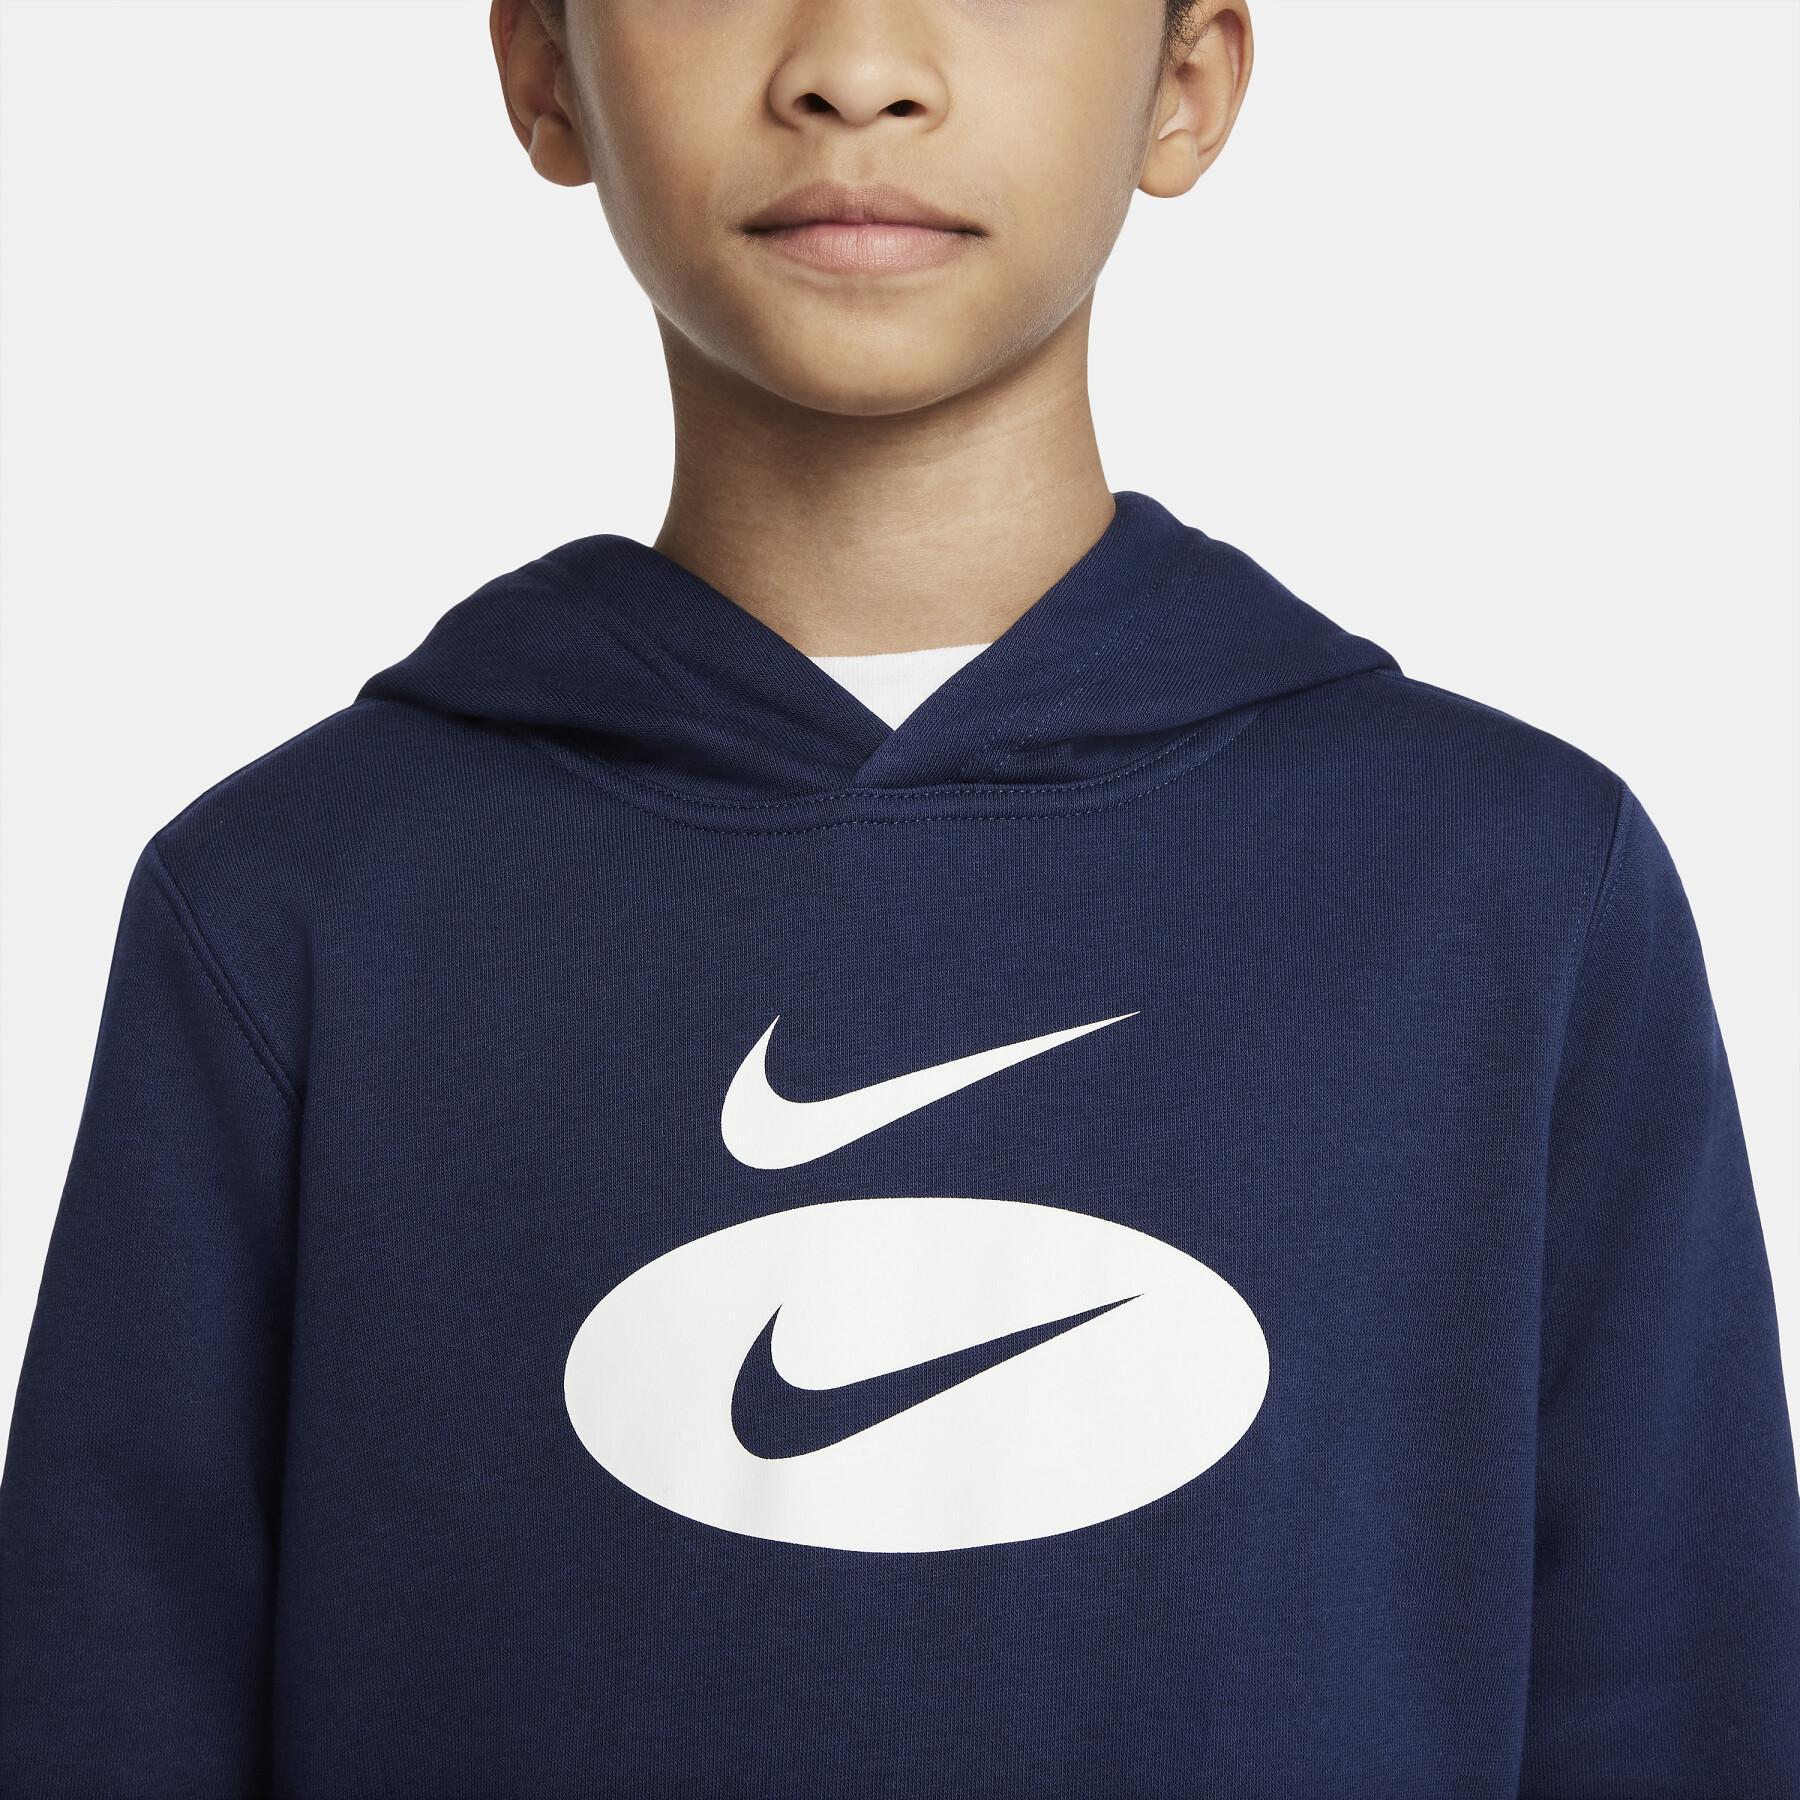 Kinder sweatshirt Nike Core